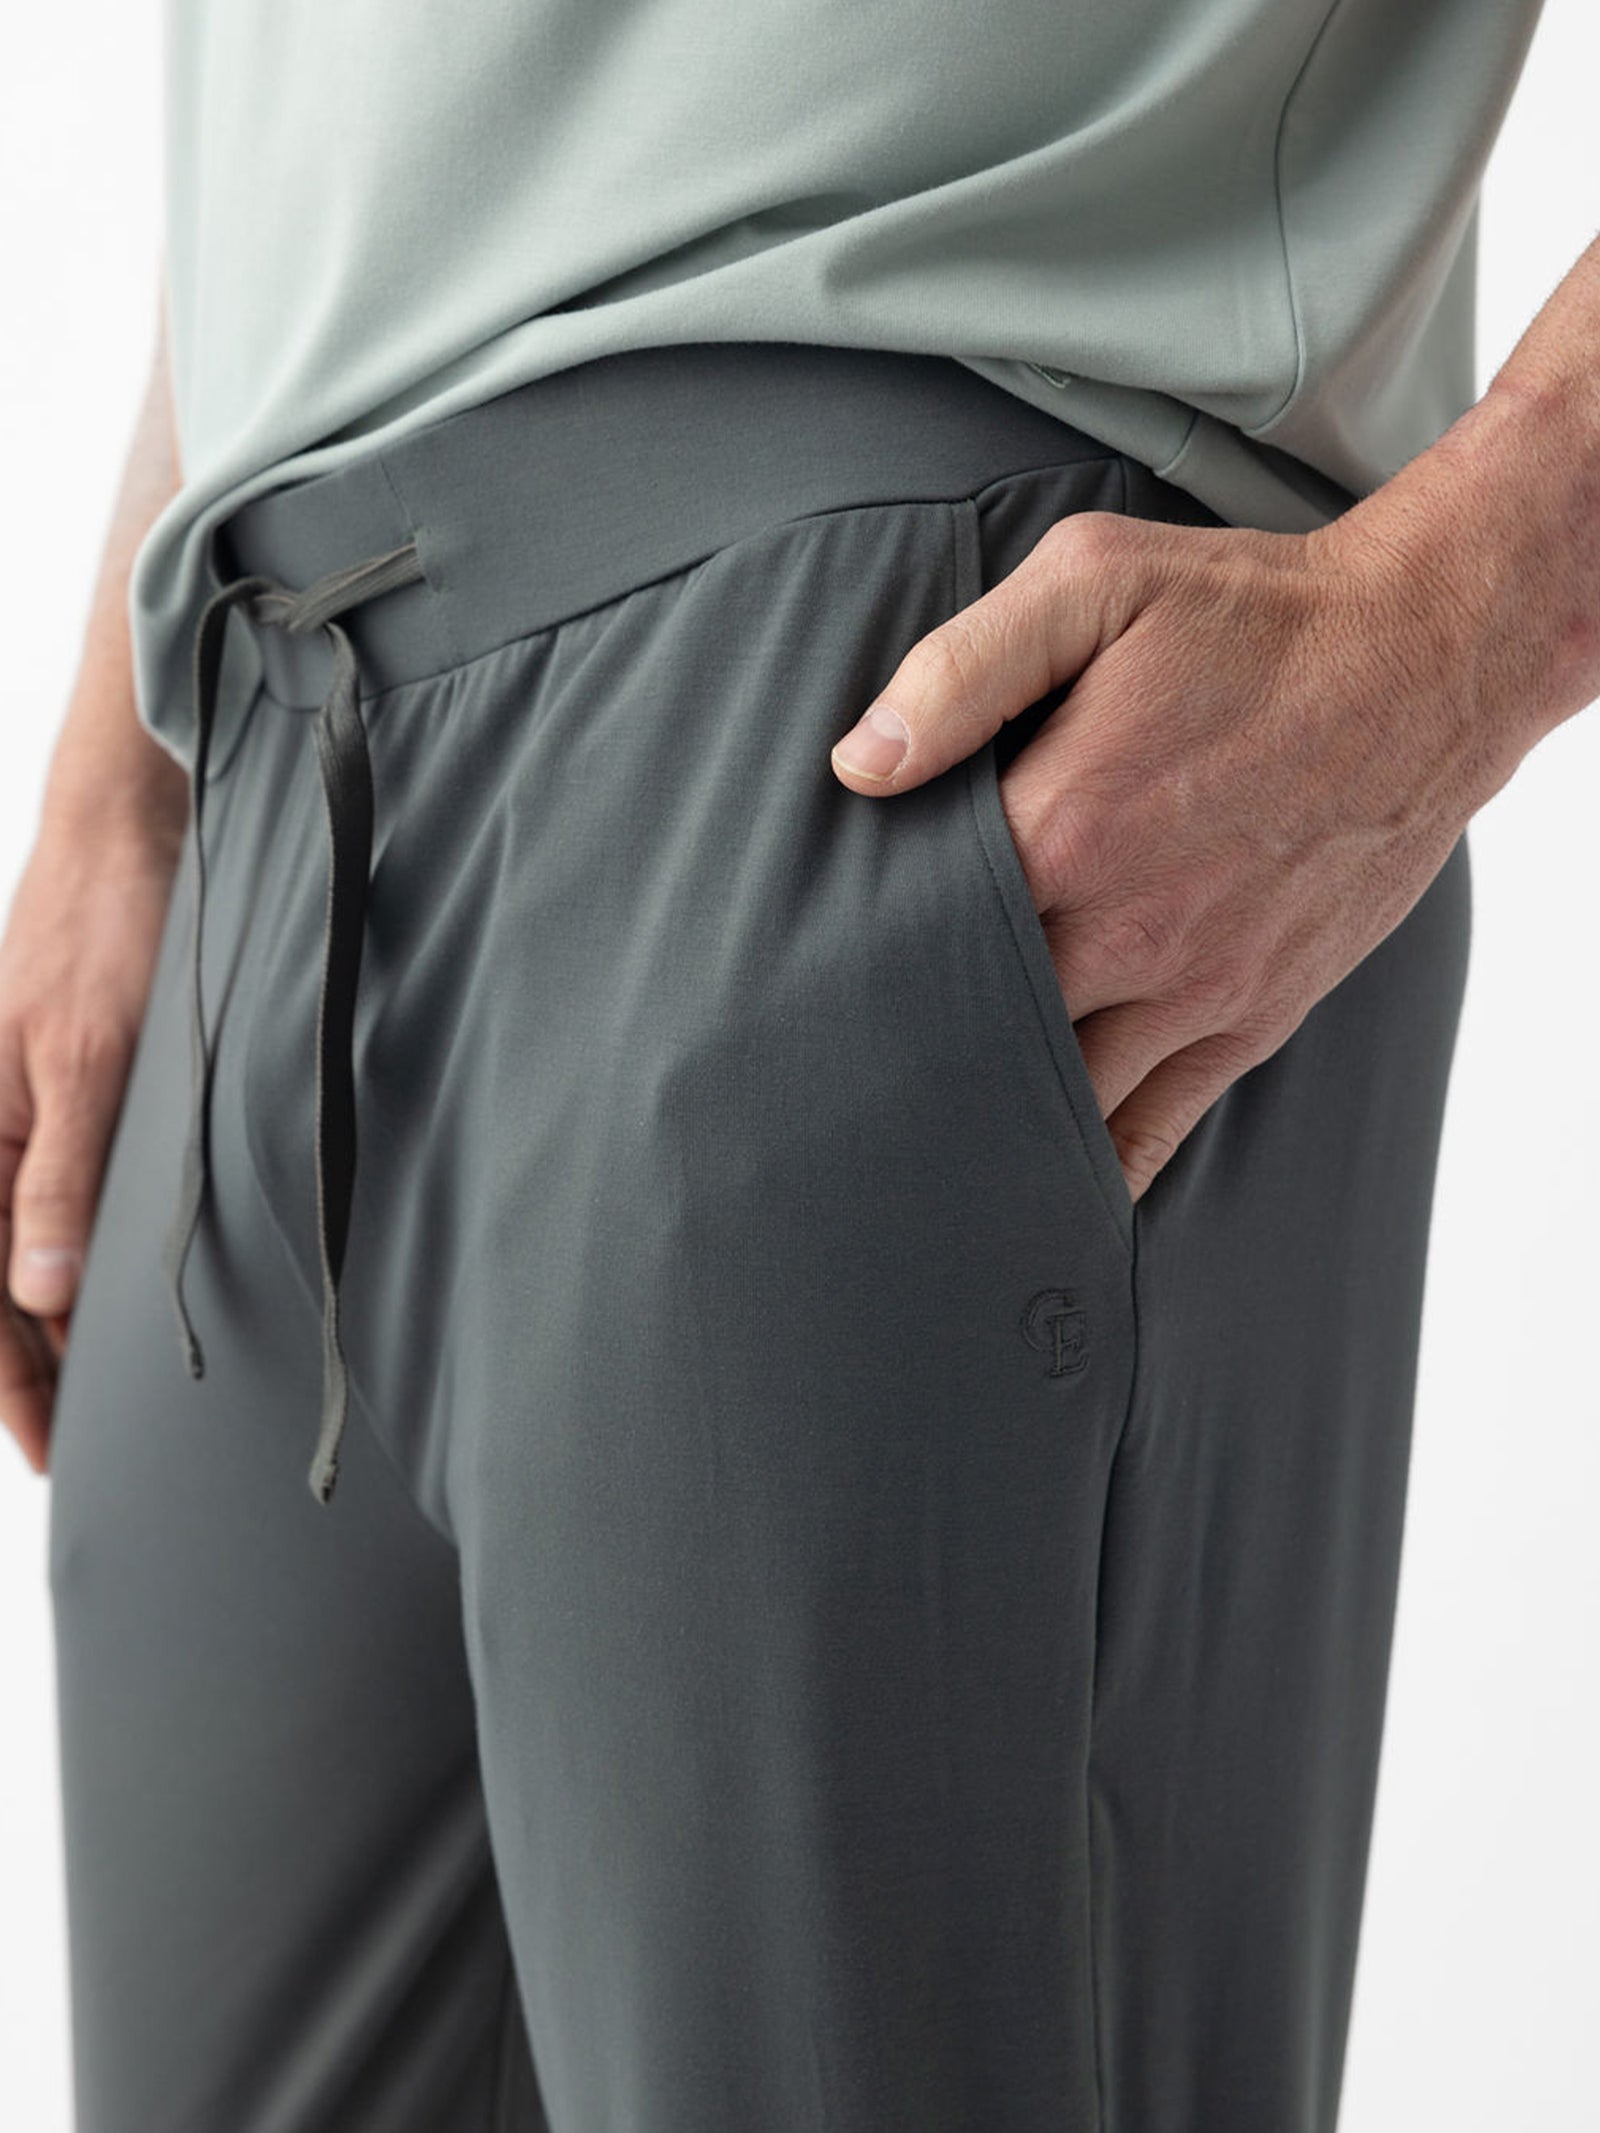 Closeup of waste and pocket of men's storm pajama pants 